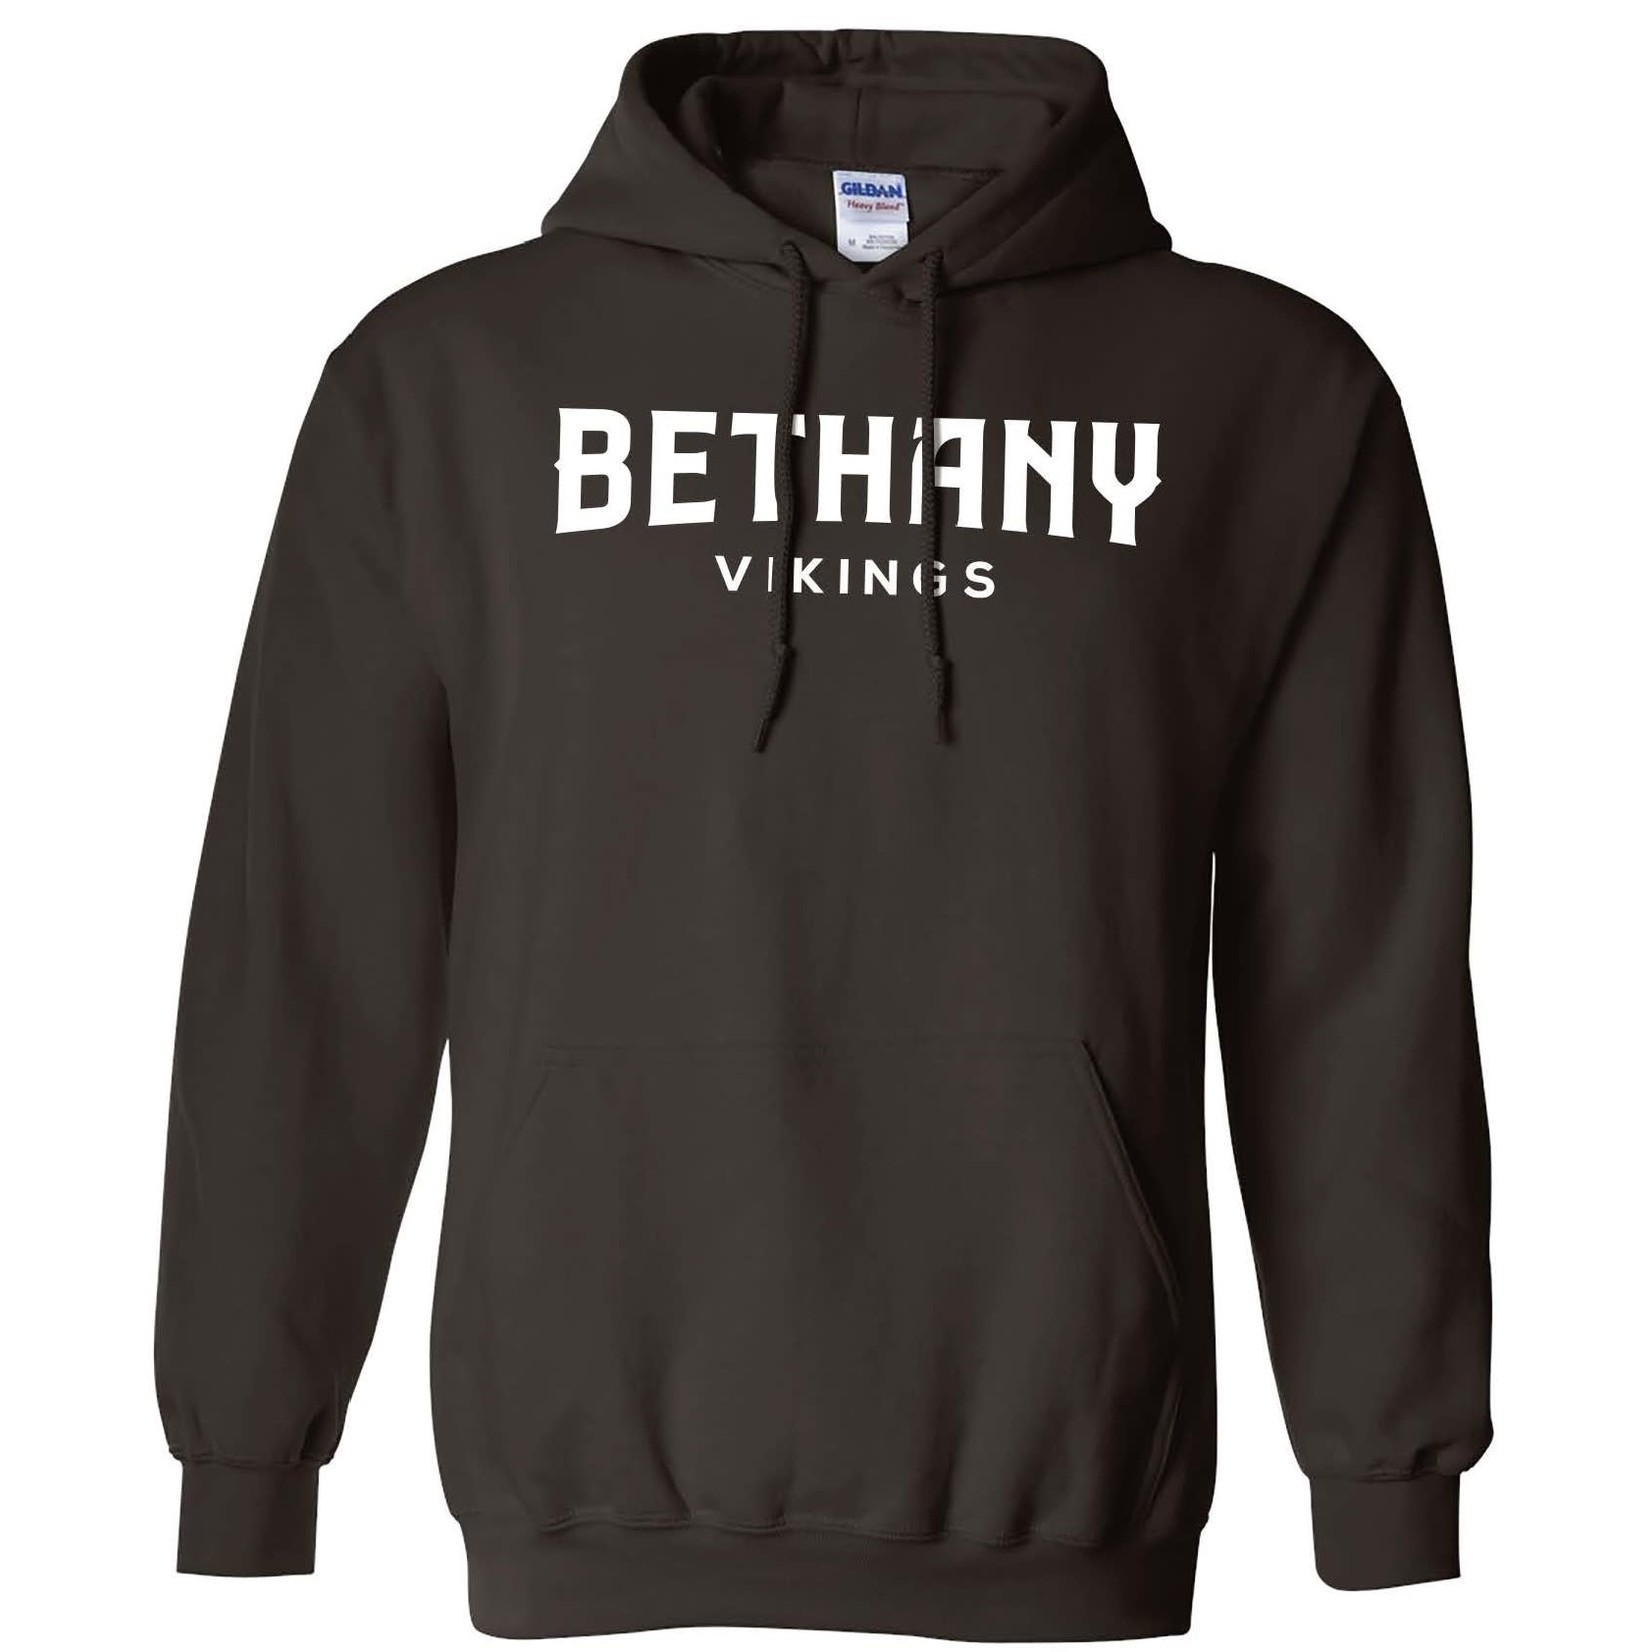 Gildan Gildan Bethany Vikings Hooded Sweatshirt